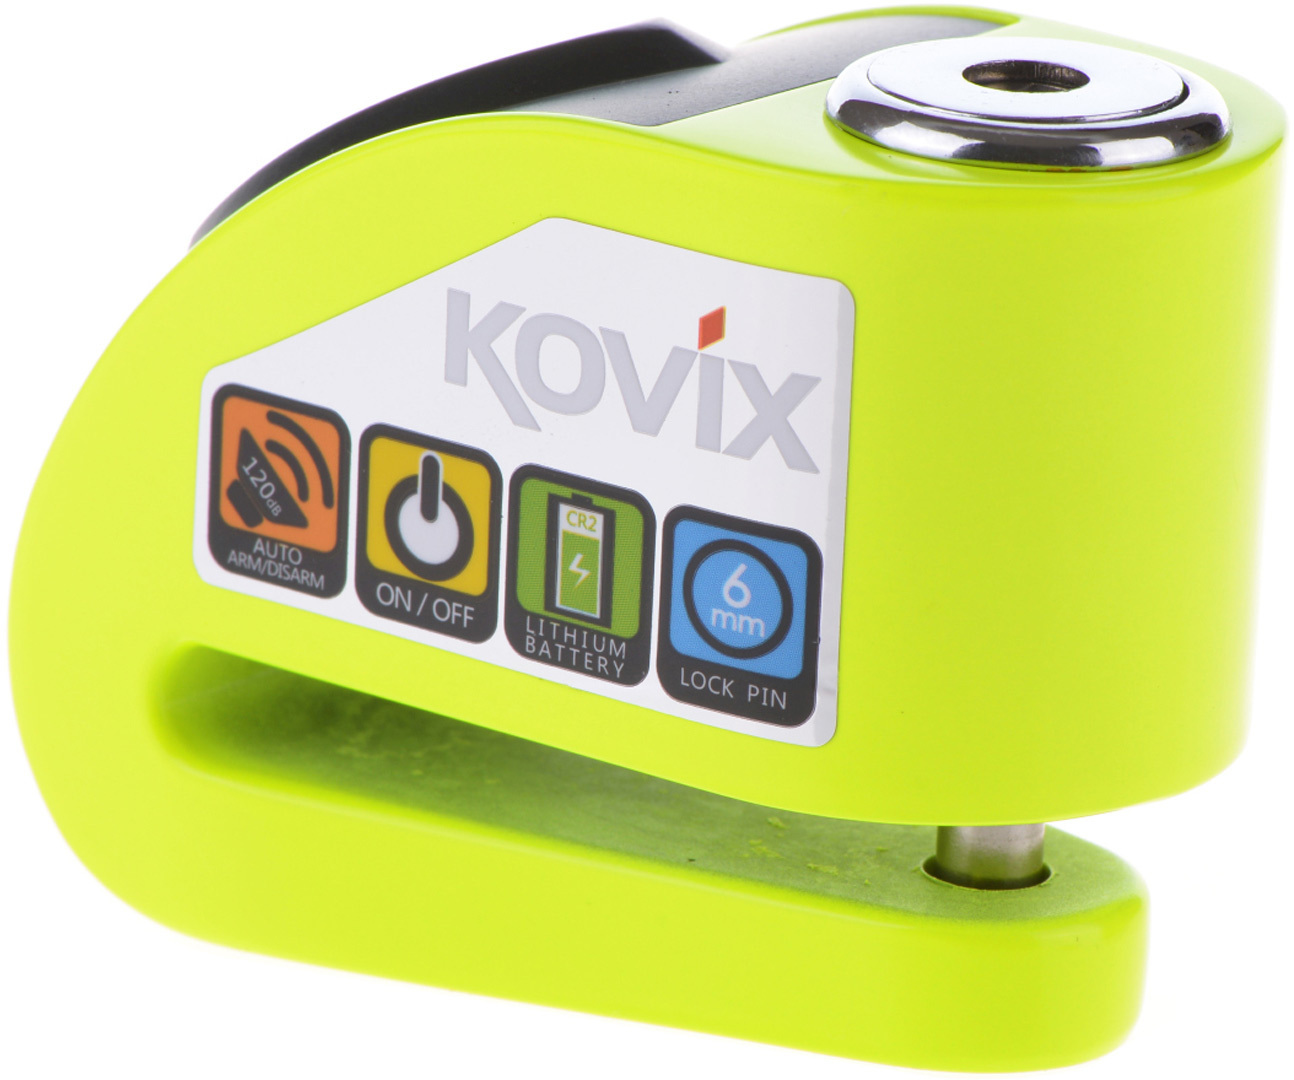 Сигнализация Kovix KD6, зеленая